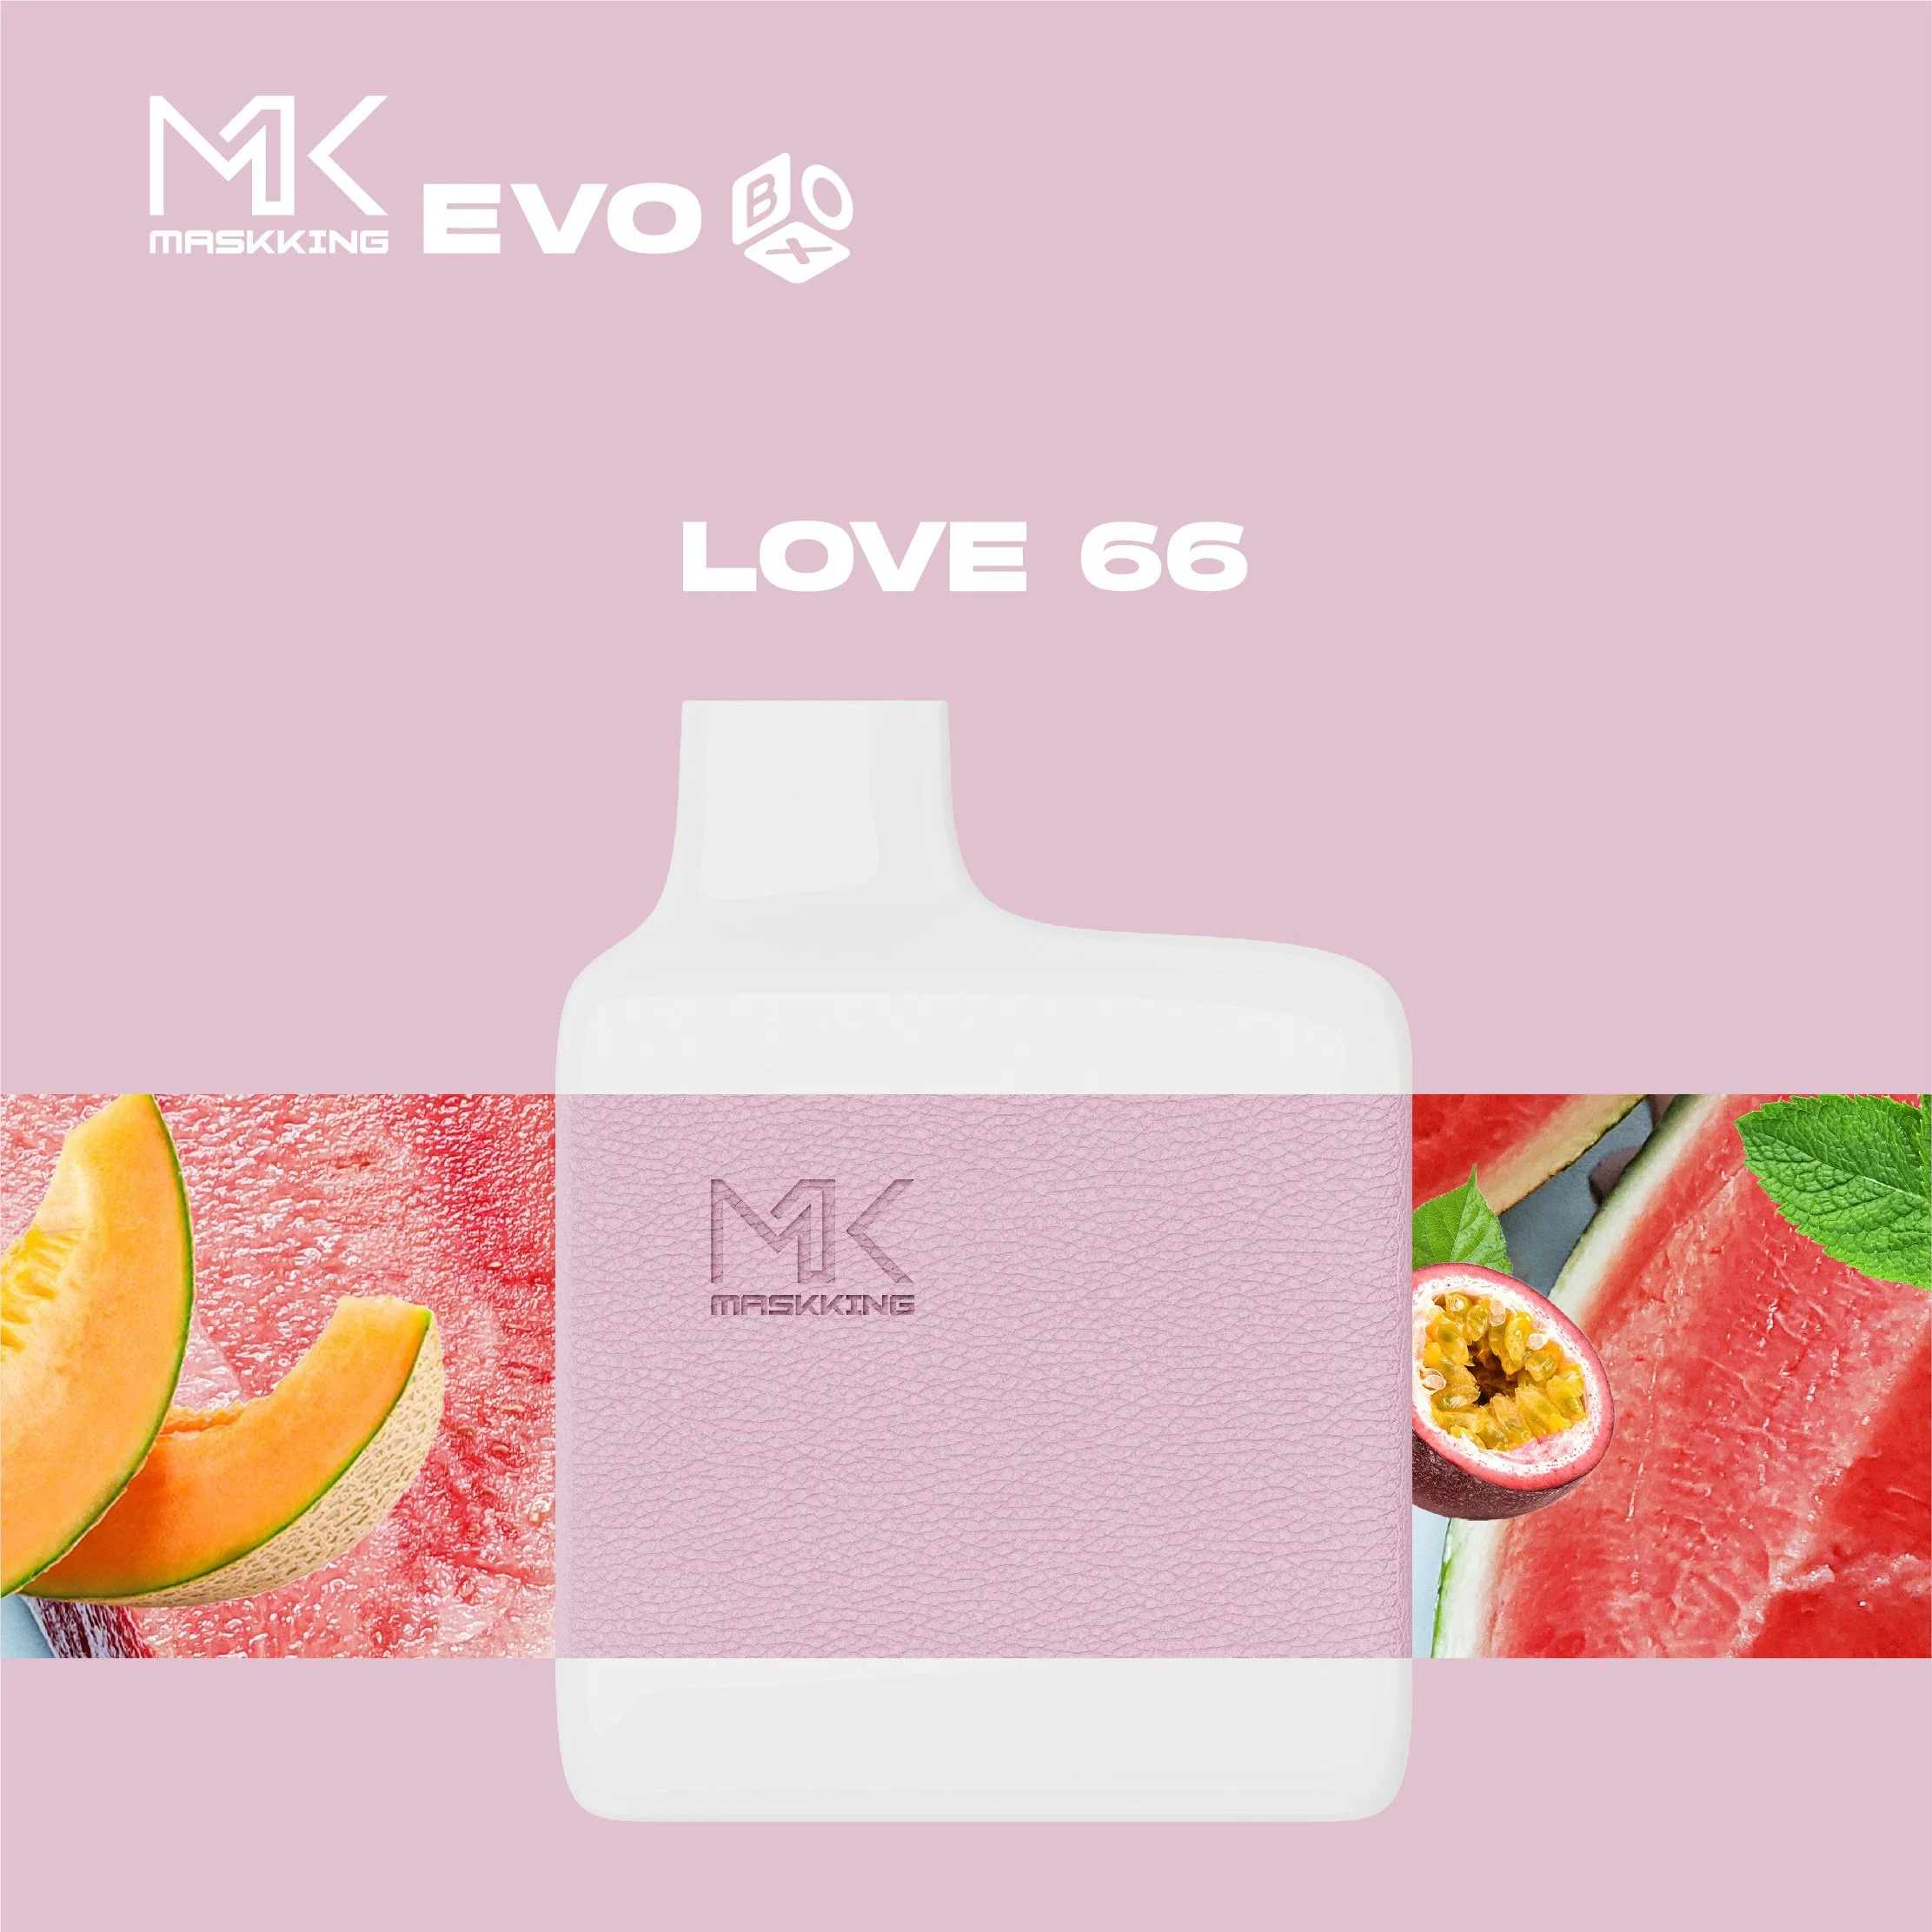 Maskking Evo Box 5000+Puffs 19 Flavors 12ml Oil 550mAh Rechargeable Vape